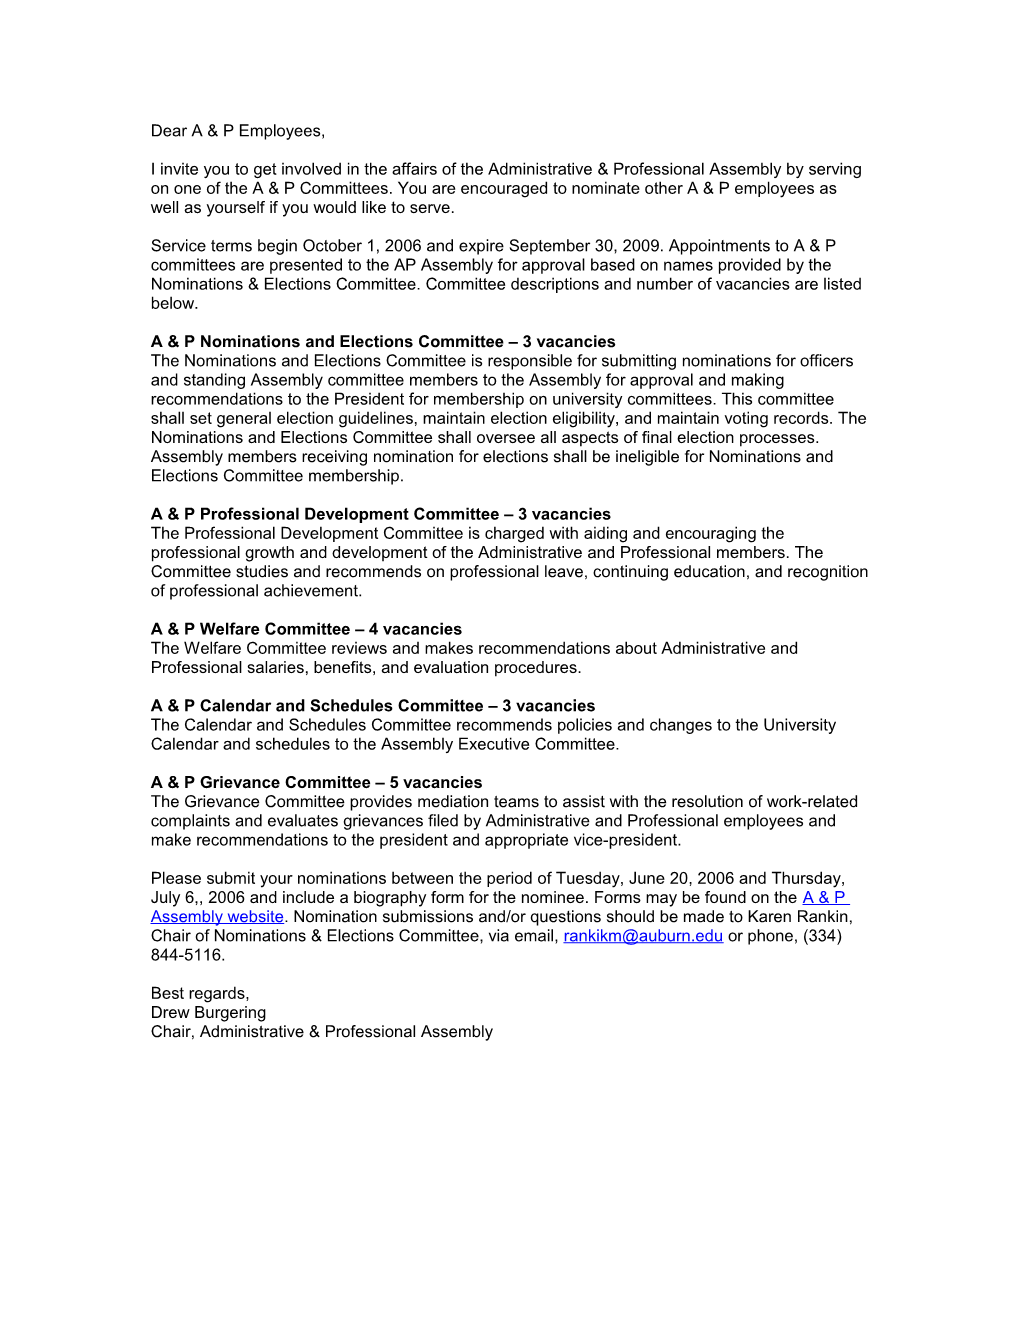 A & P Professional Development Committee 3 Vacancies